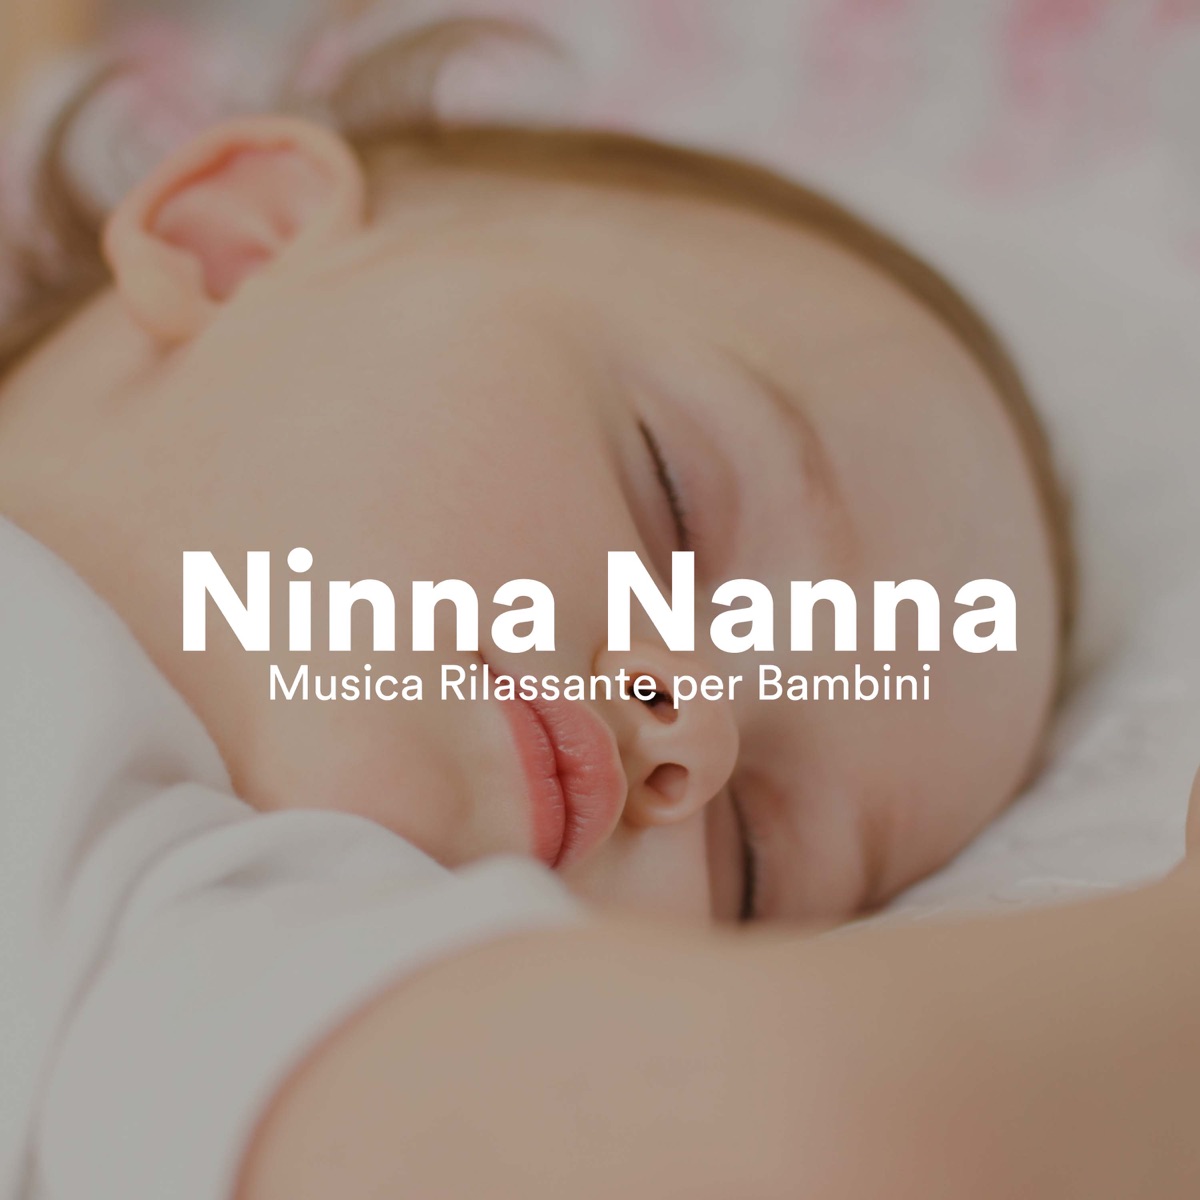 Ninna nanna: musica rilassante per bambini - Ambient Arena的專輯 - Apple Music